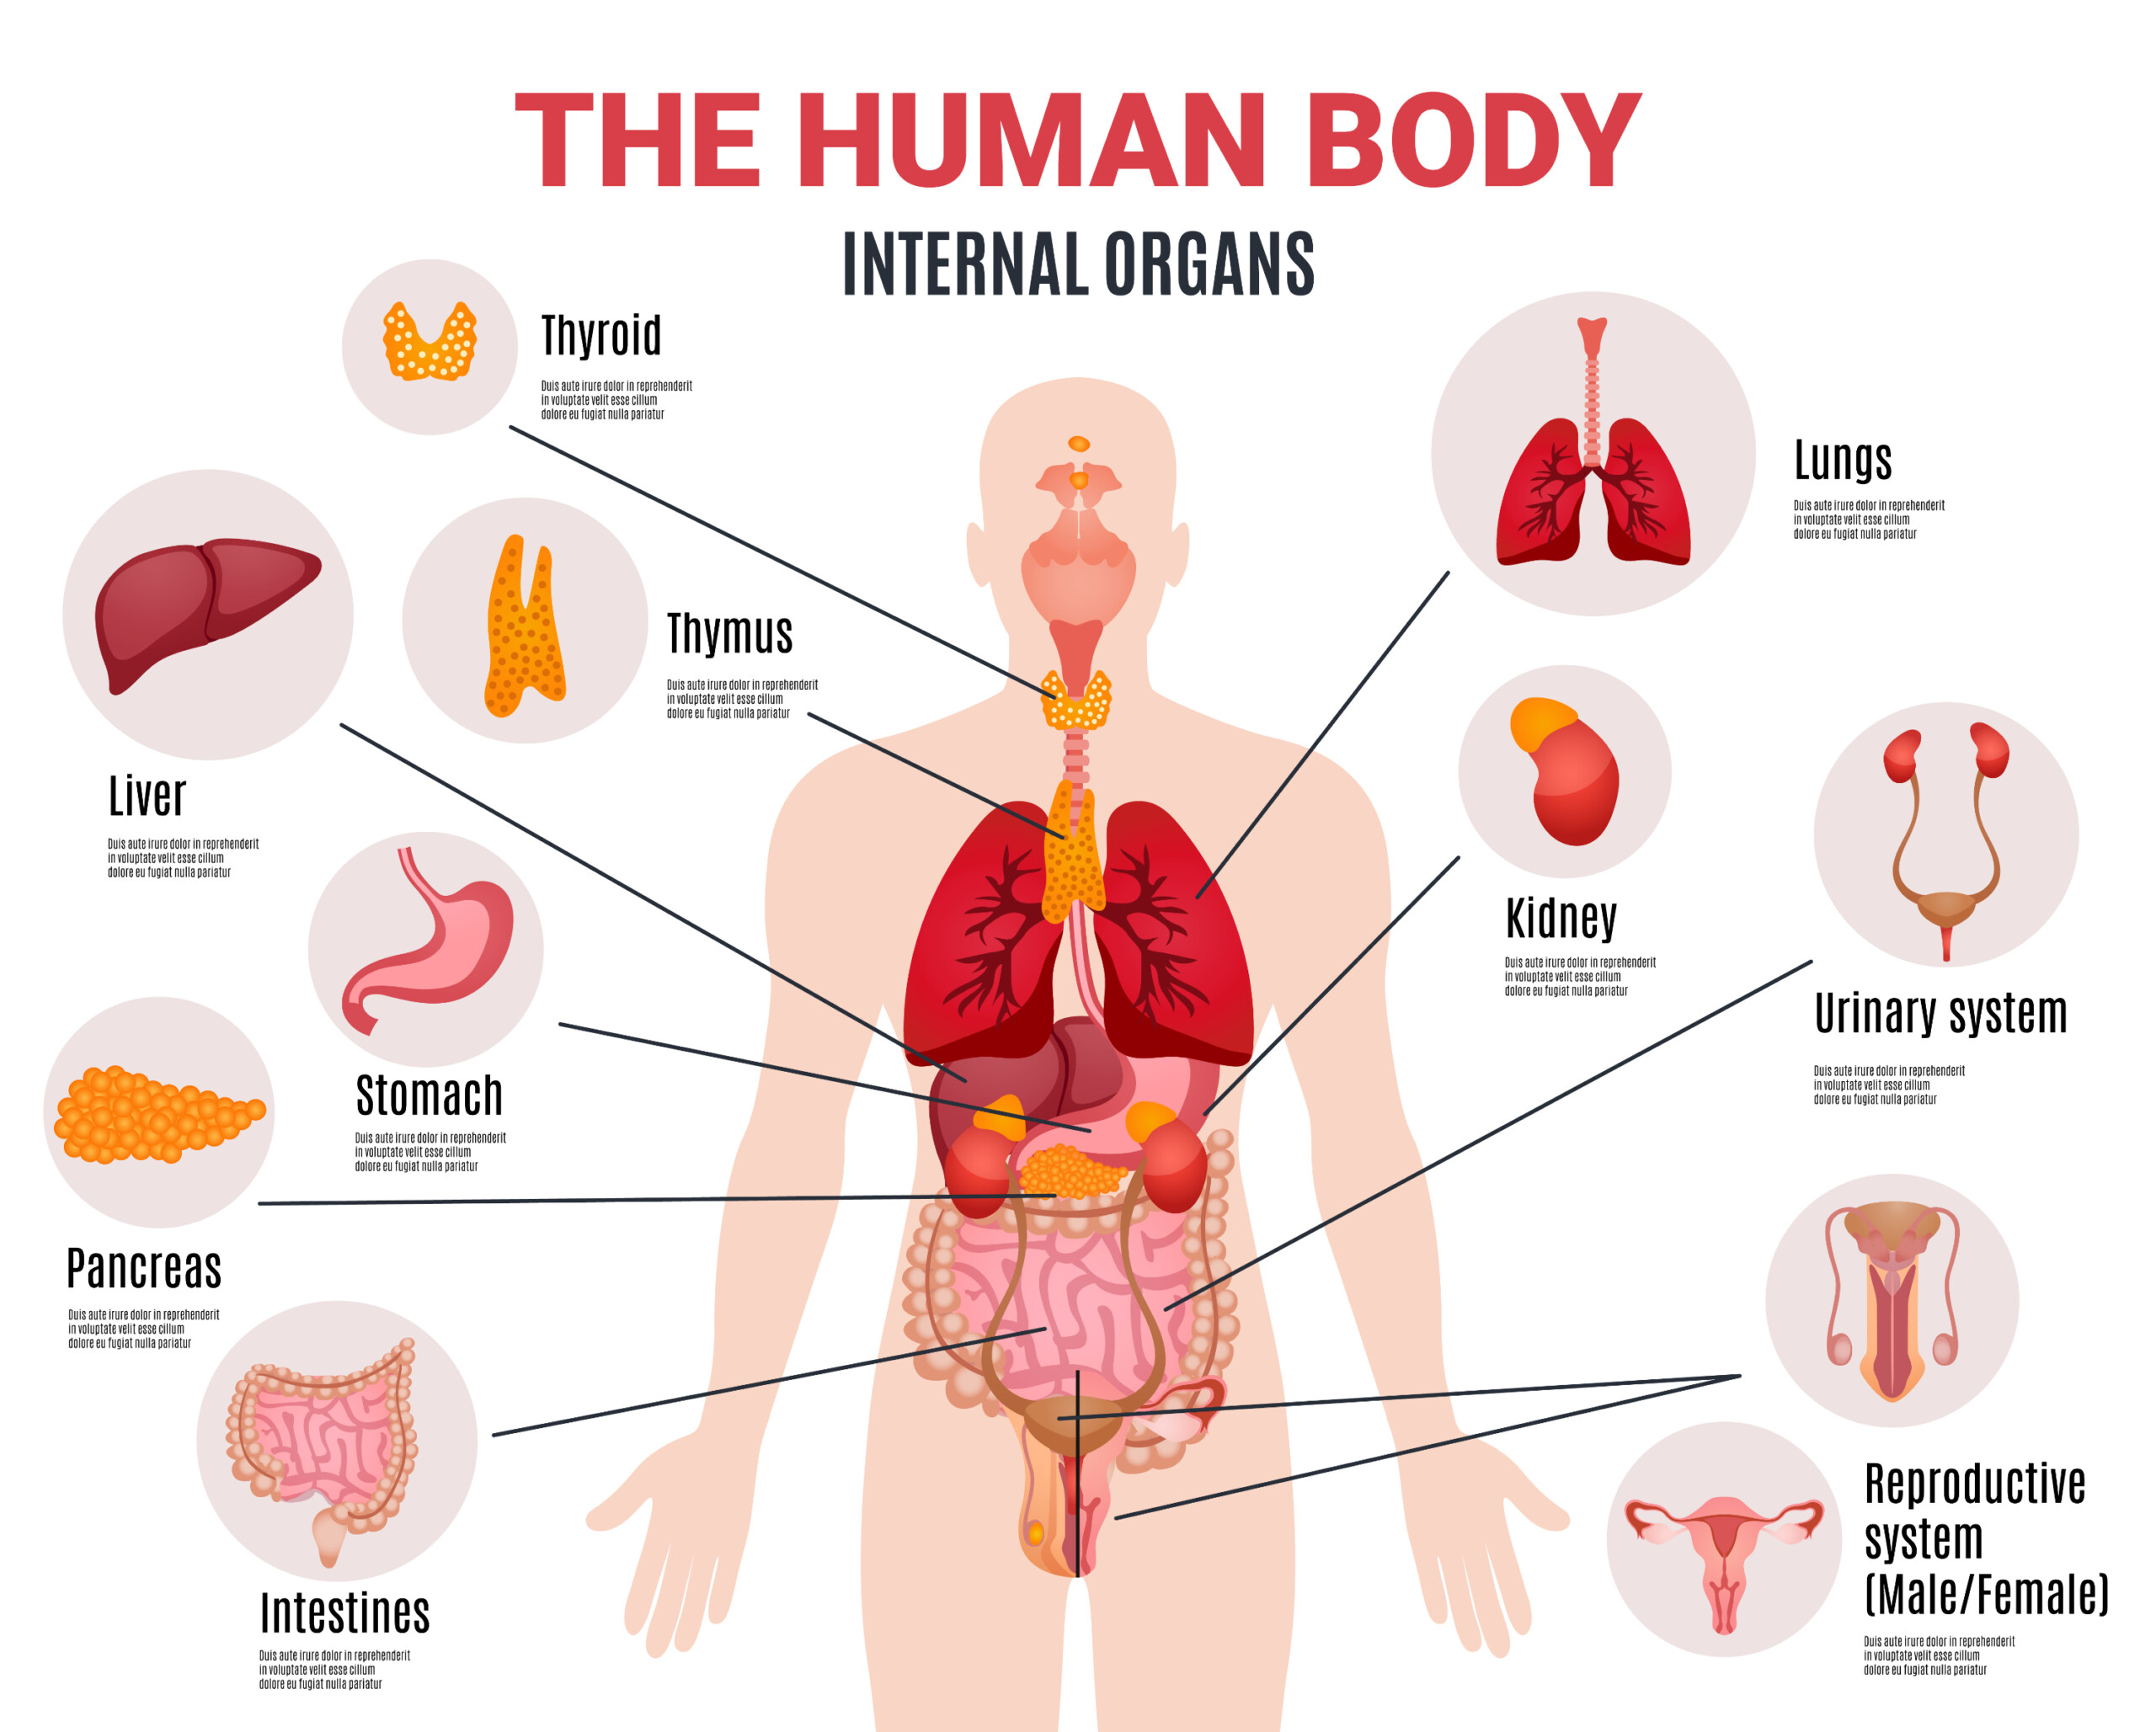 Human Internal Organs - Original image